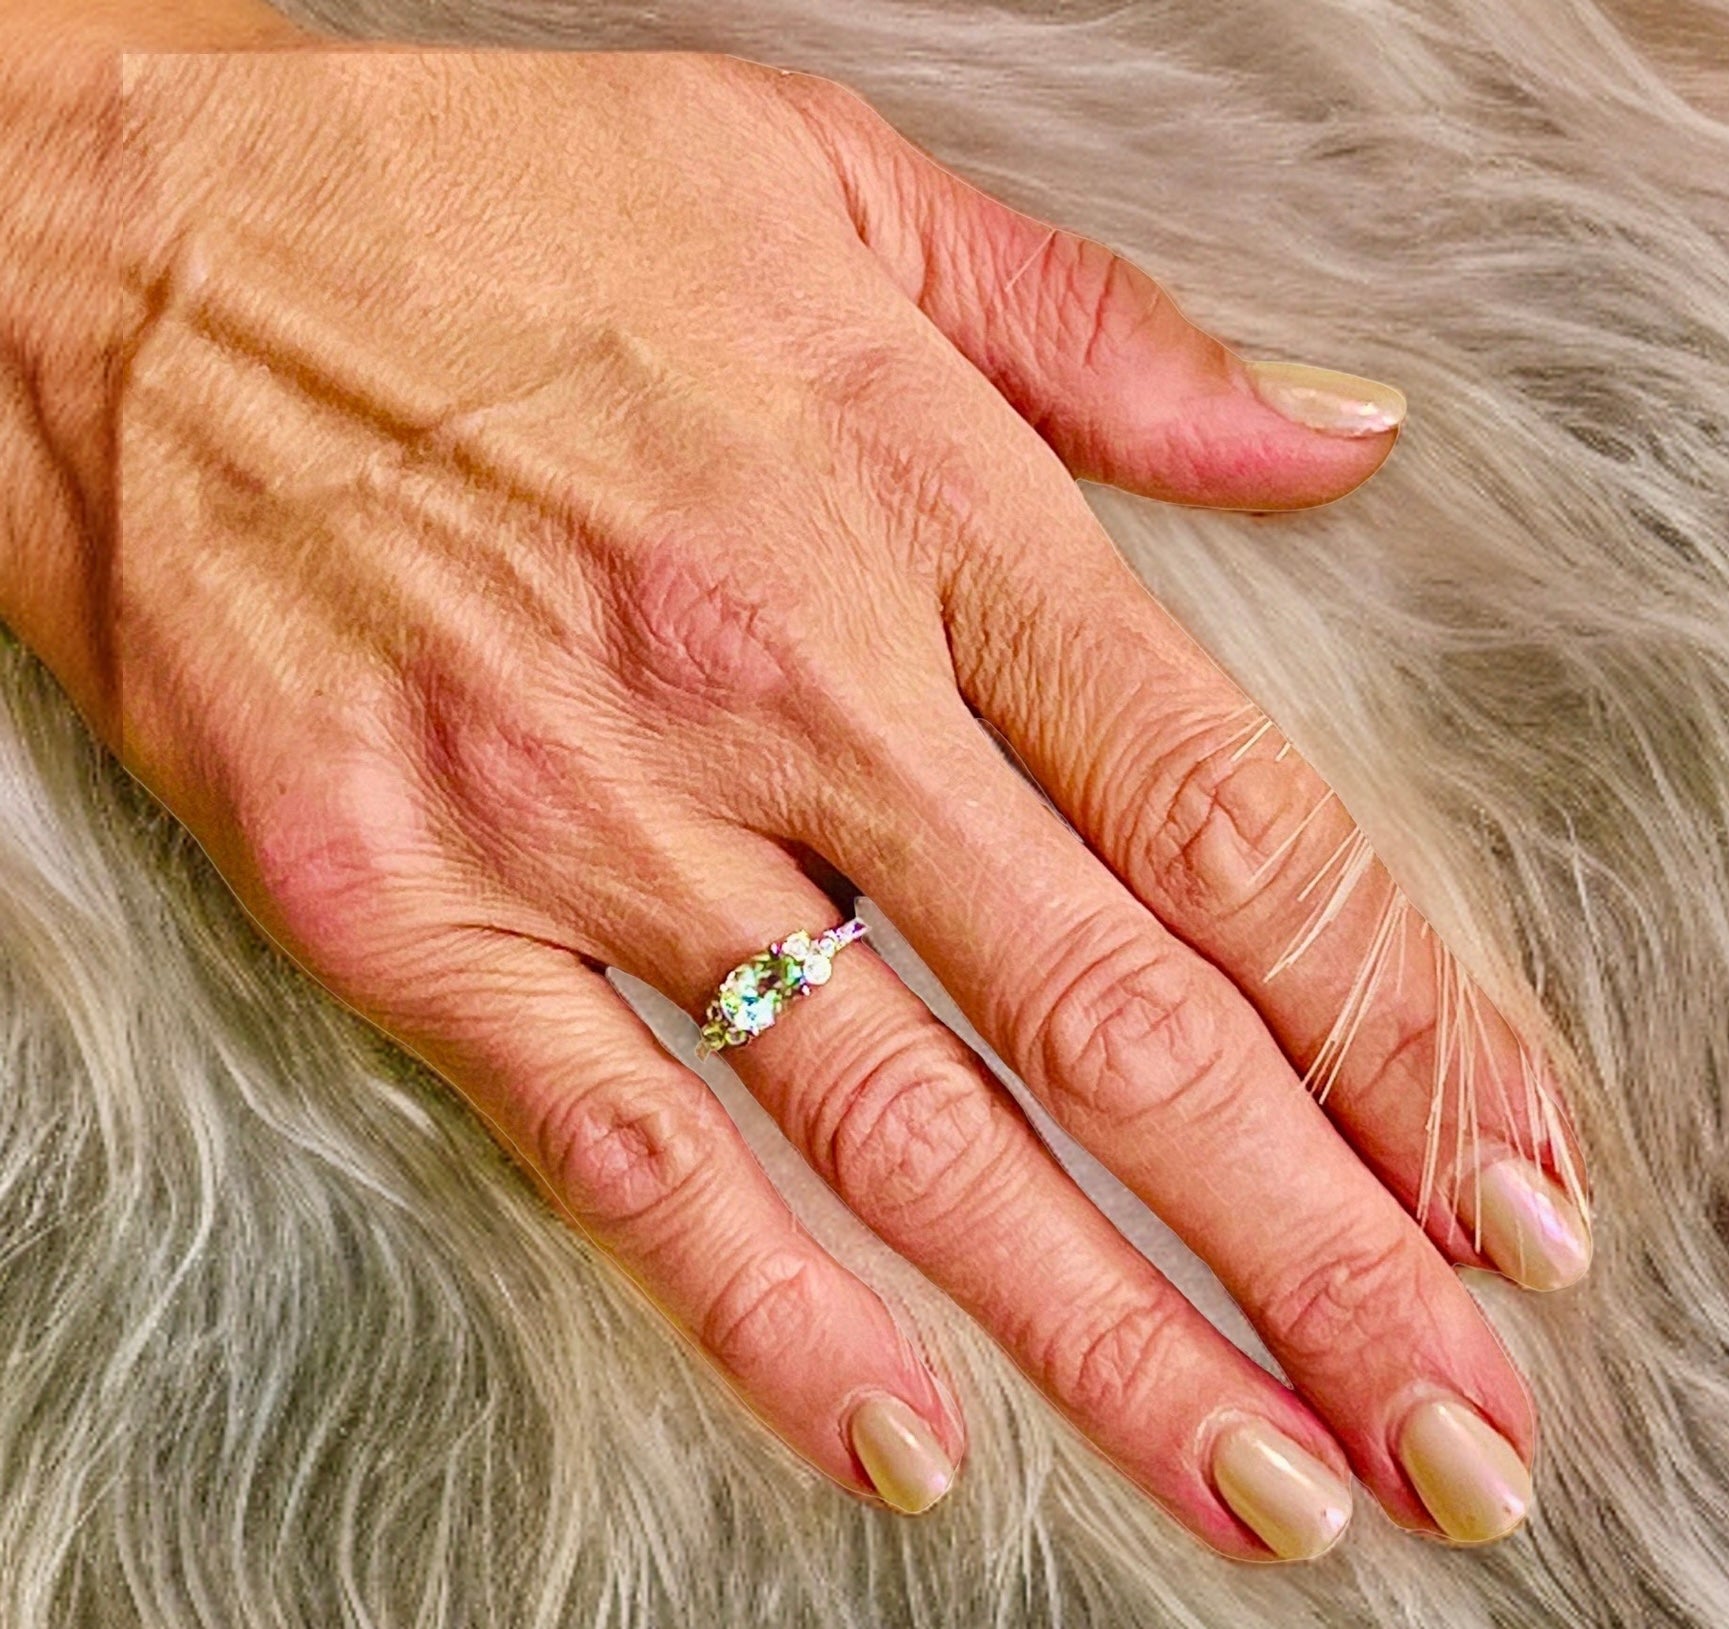 Natural Aquamarine Diamond Ring Size 6.5 14k W Gold 1.46 TCW Certified $2,950 217850 - Certified Fine Jewelry